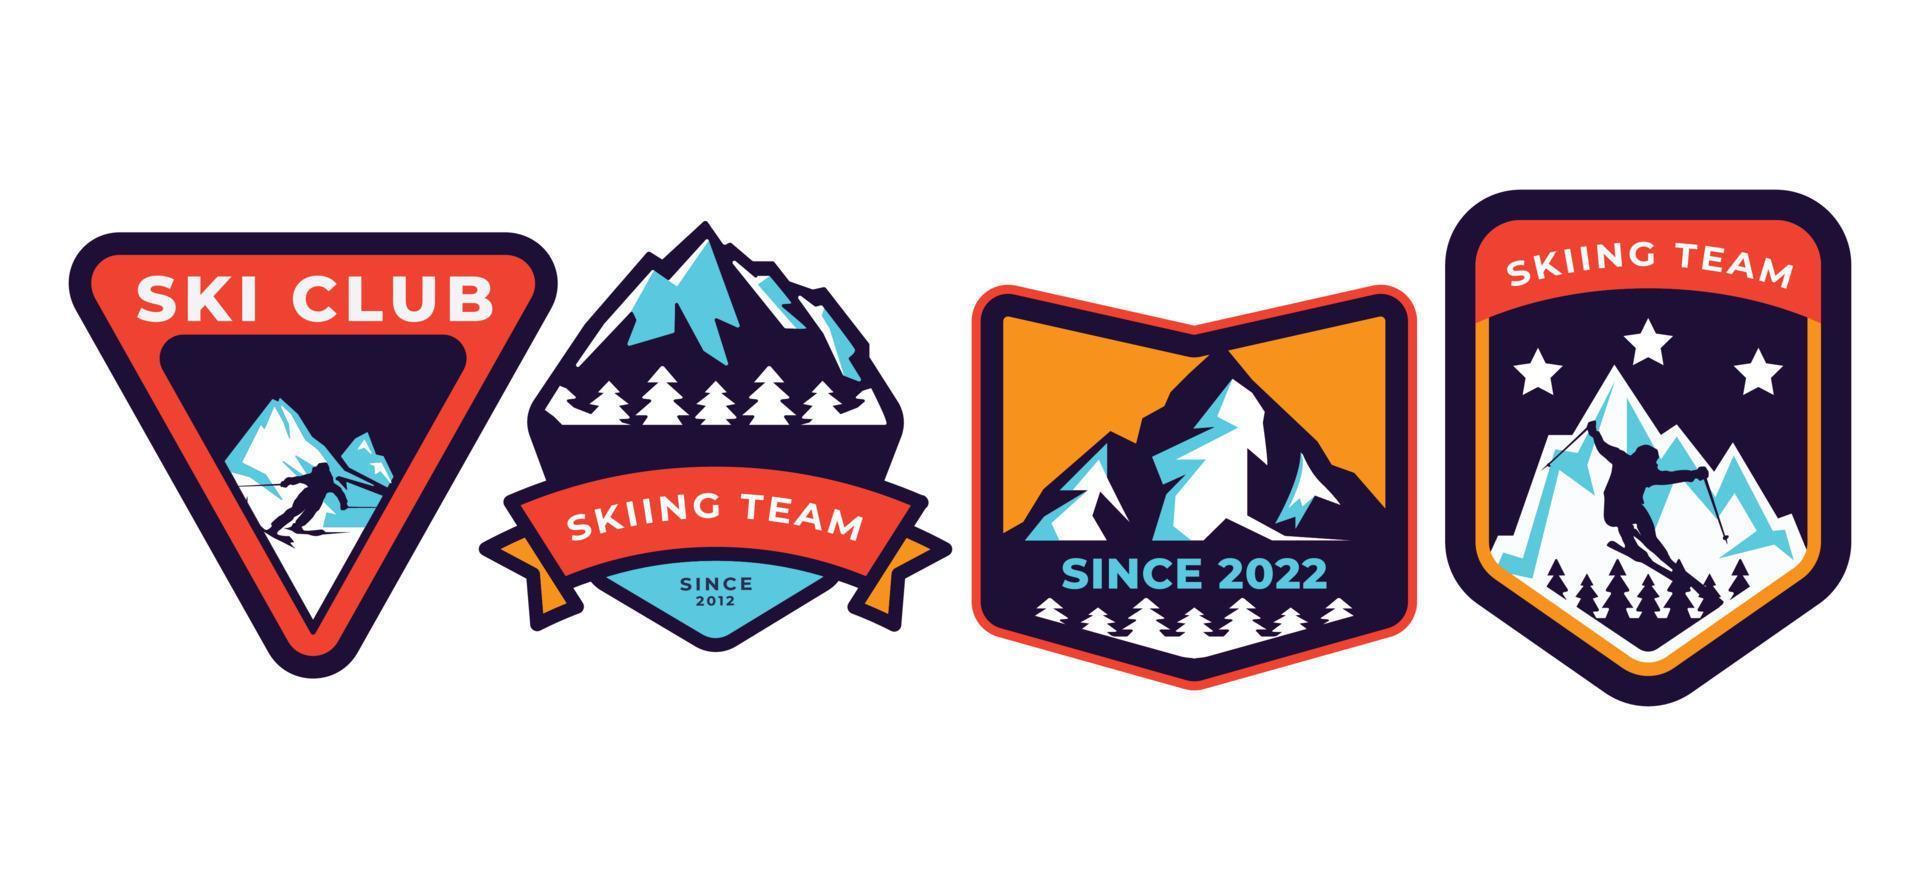 Set of ski patrol, ski resort, ice mountain badges and logo patches. Winter holidays extreme sports logo. vector